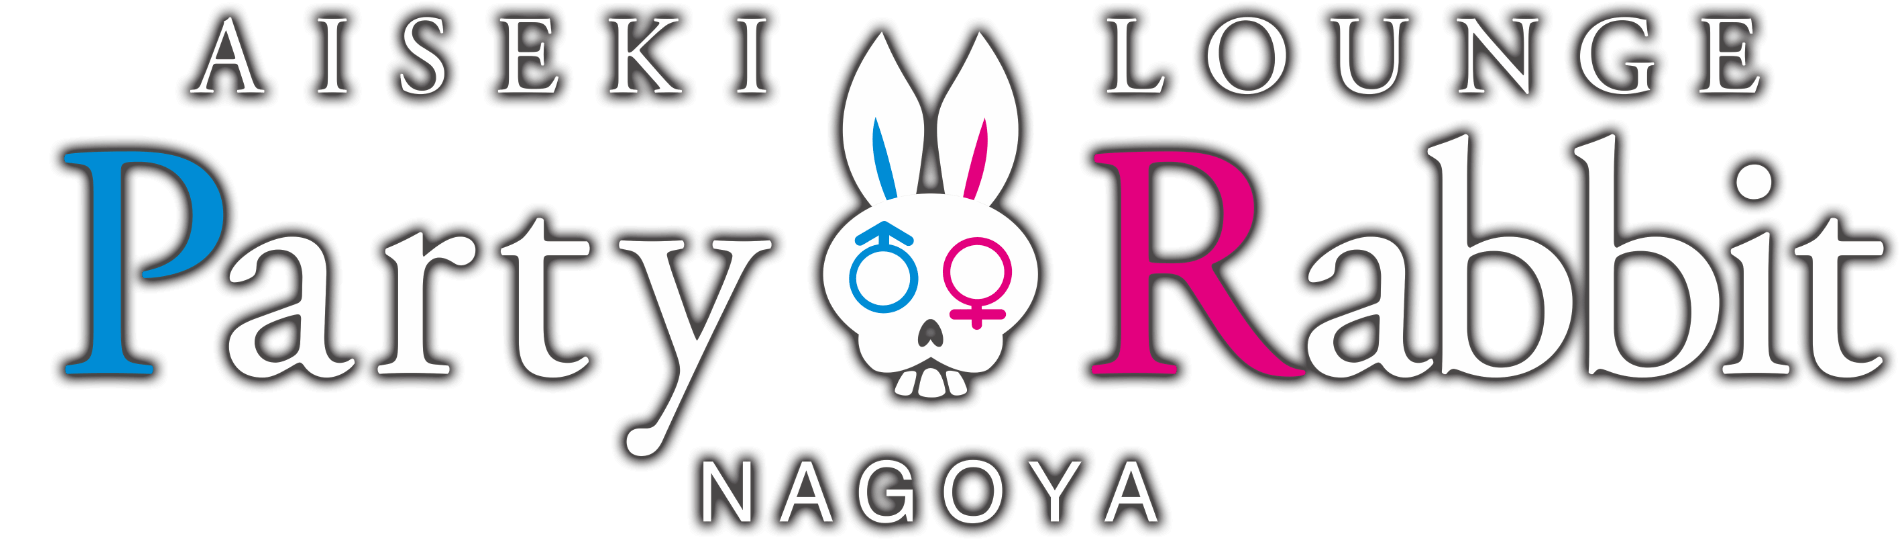 AISEKI LOUNGE Party Rabbit NAGOYA